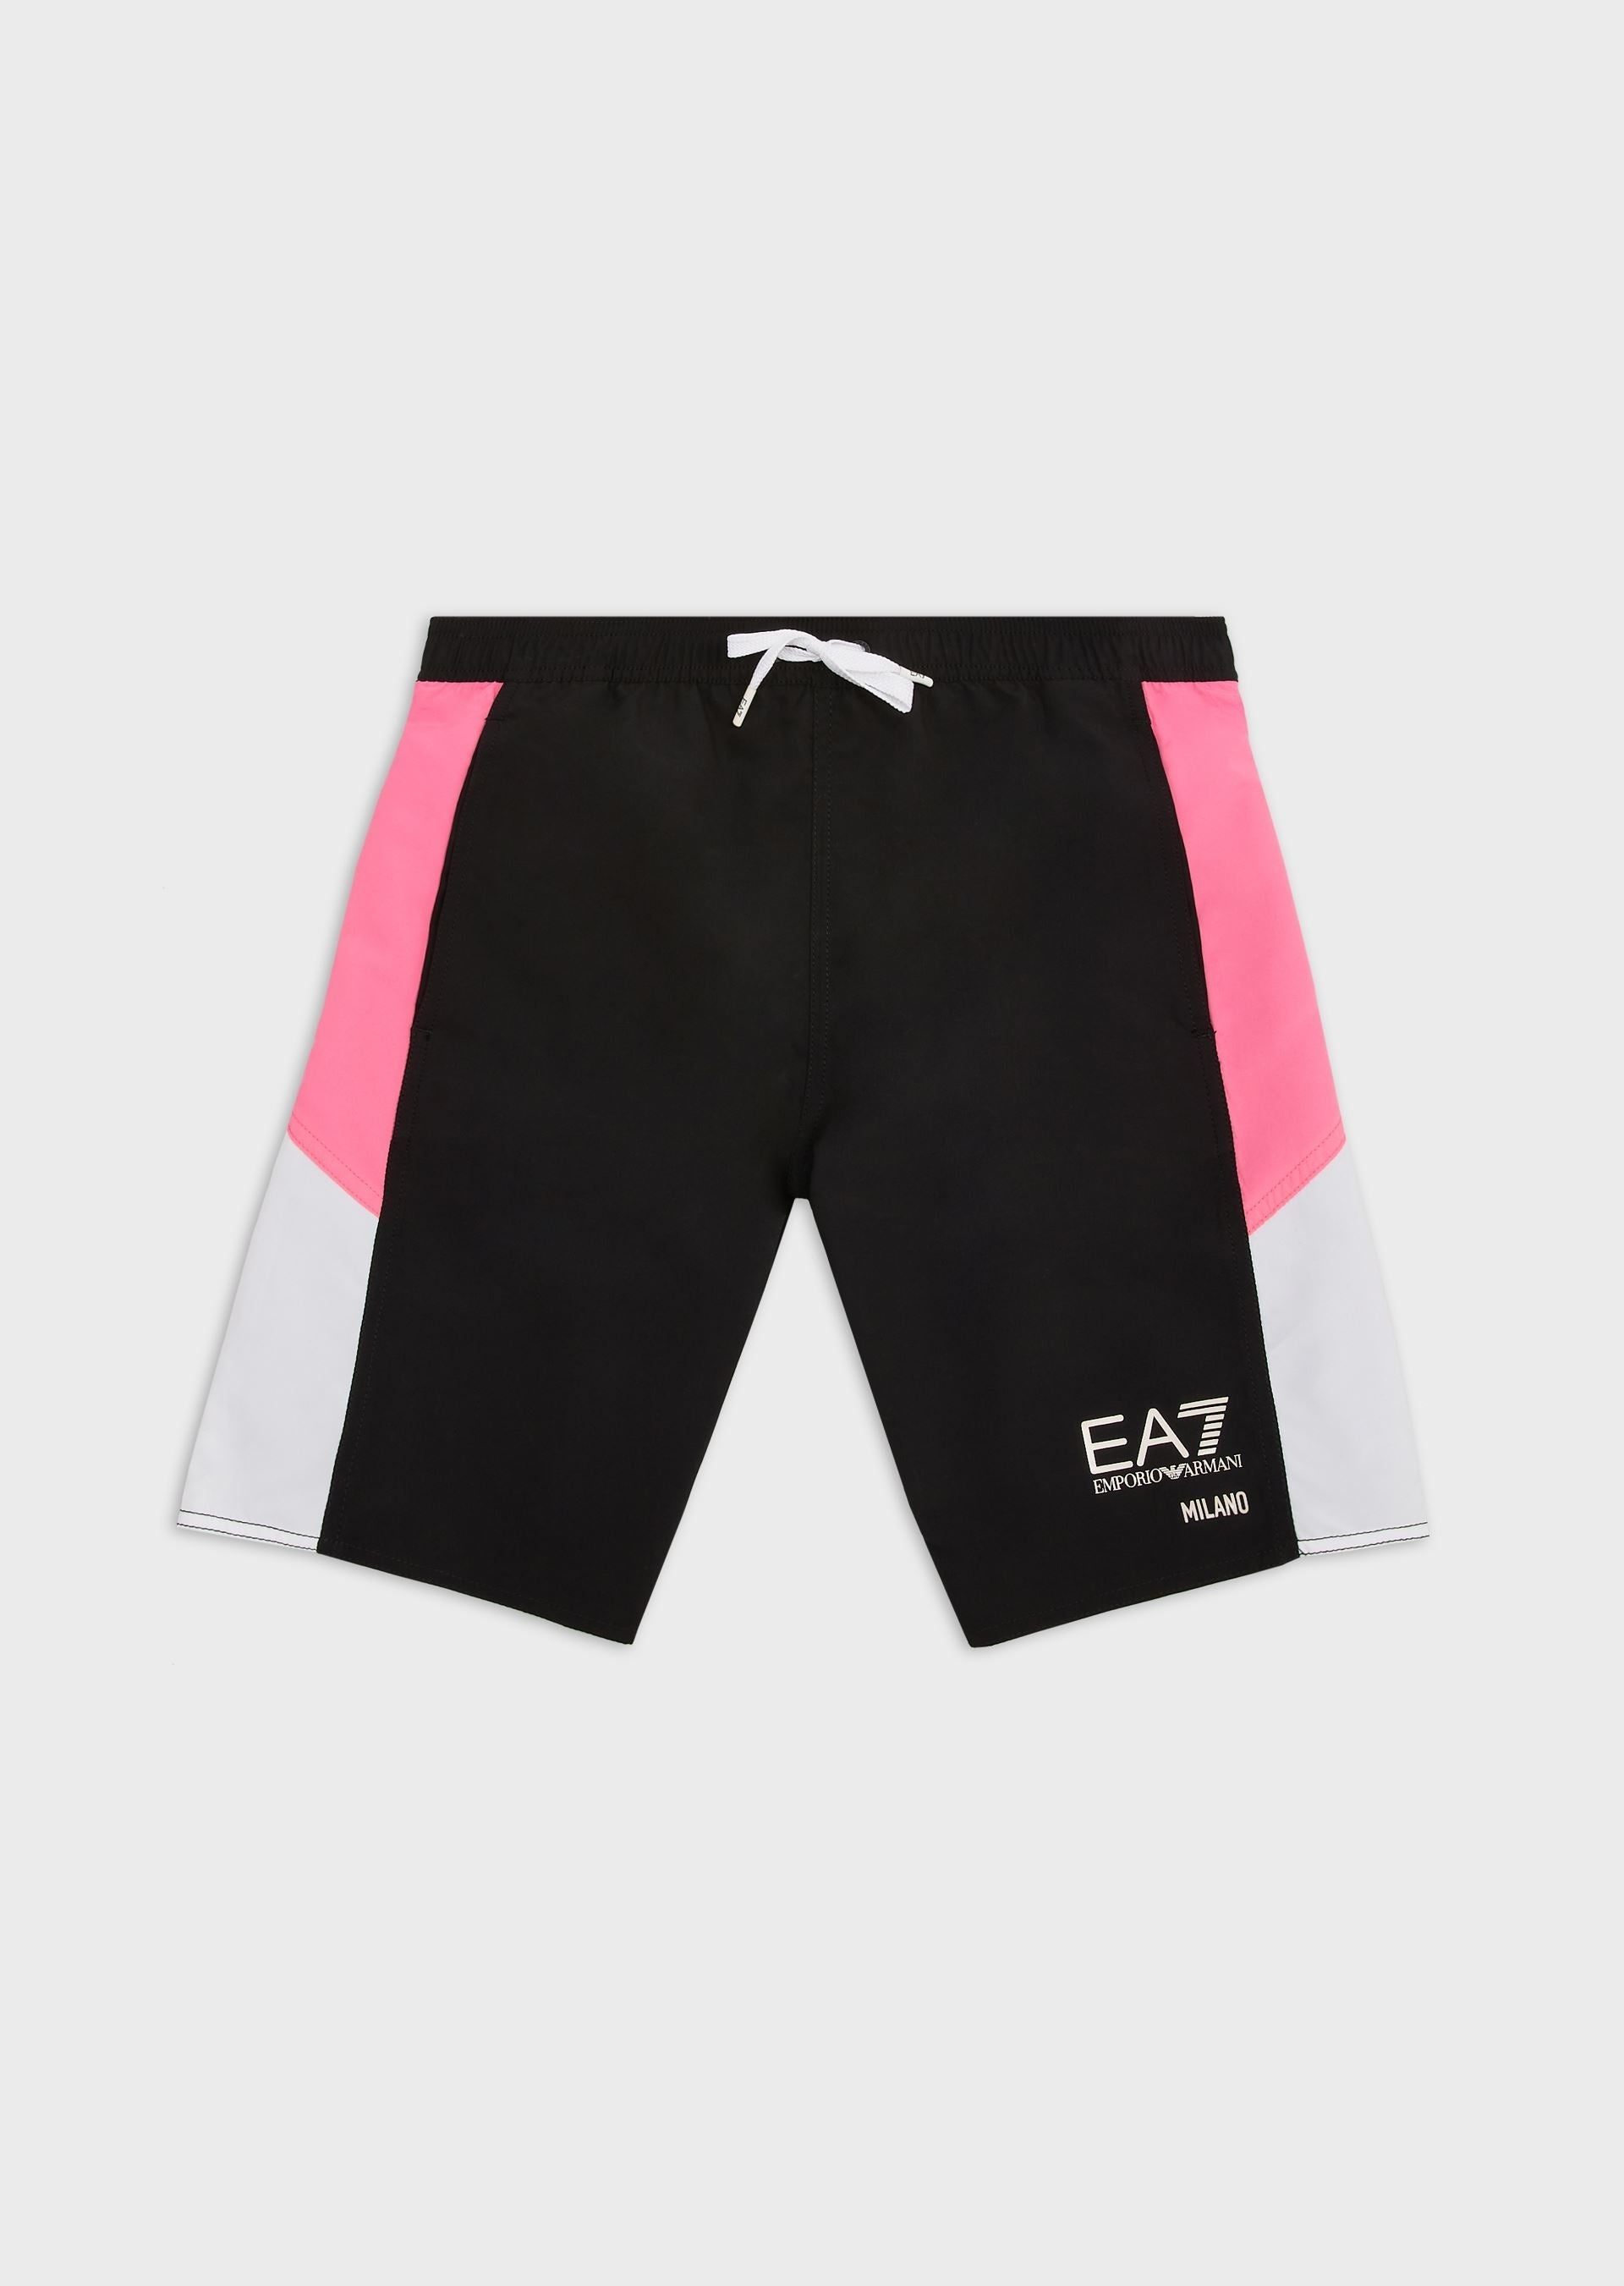 Emporio Armani EA7 Milano Swim Shorts - Black/Pink 